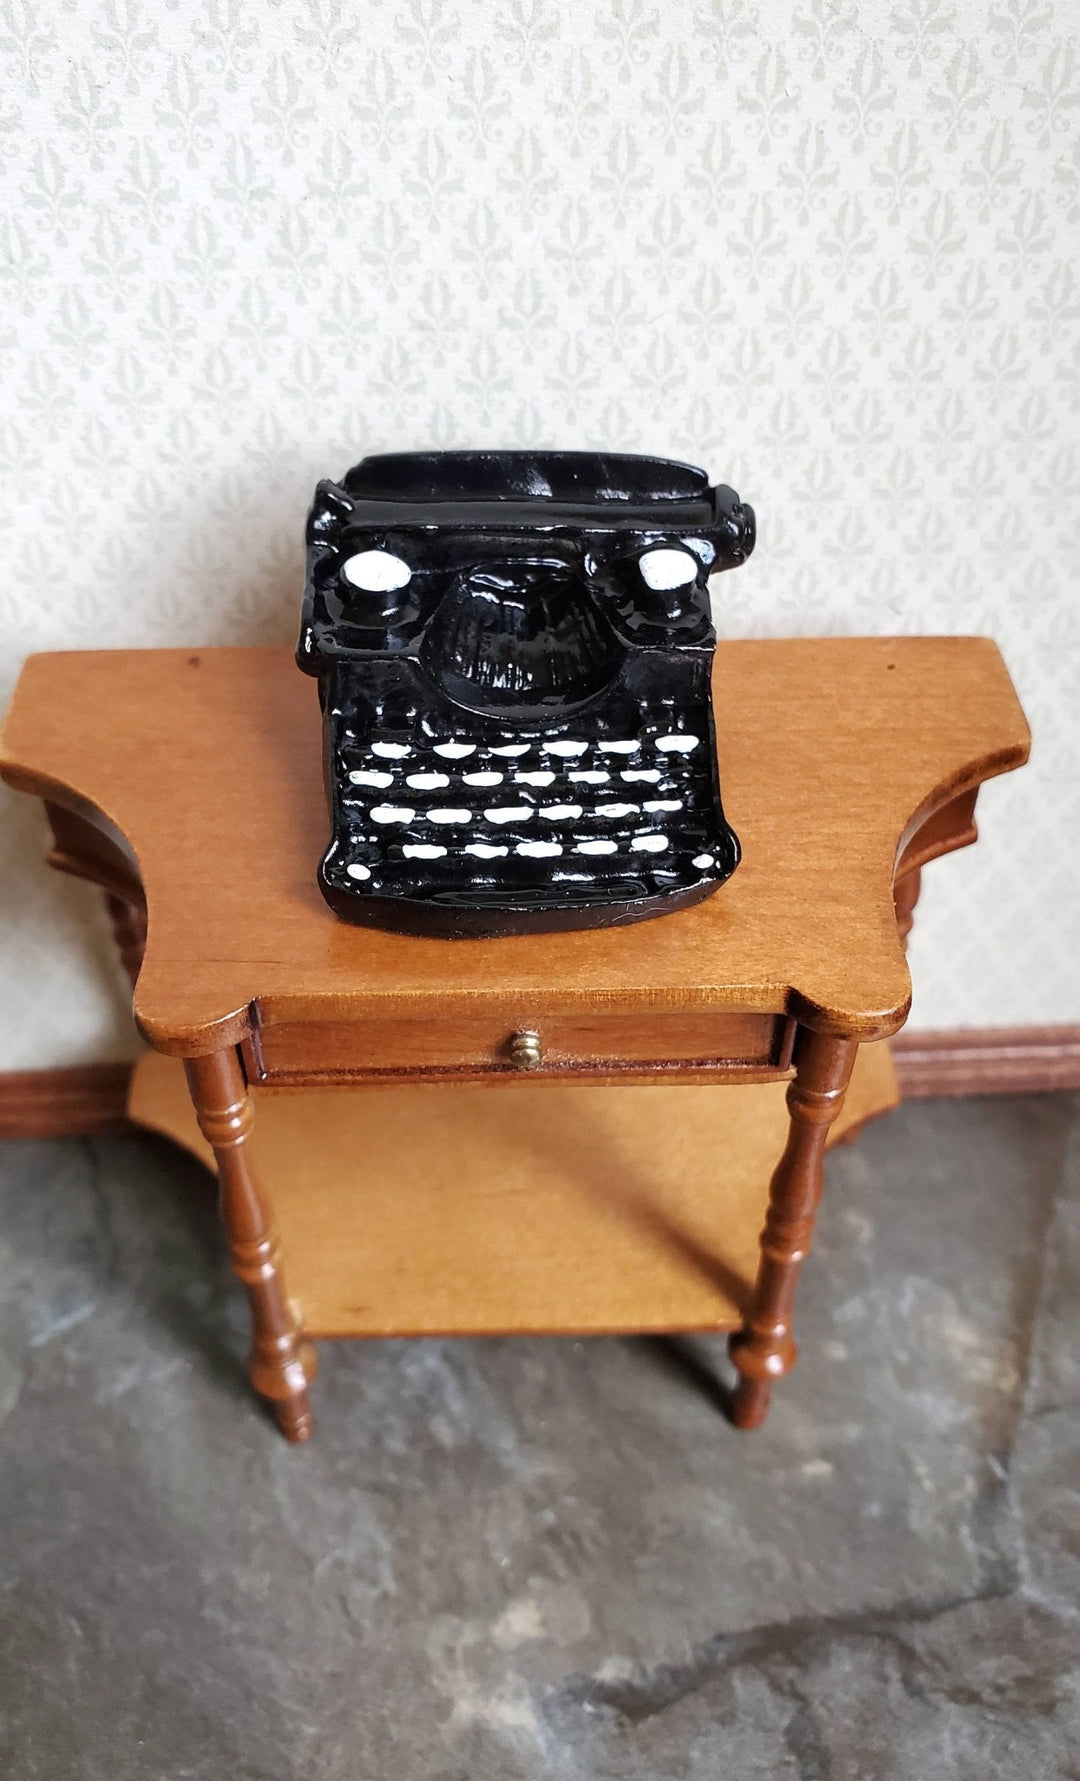 Dollhouse Miniature Manual Typewriter Vintage Style Black 1:12 Scale Accessories - Miniature Crush